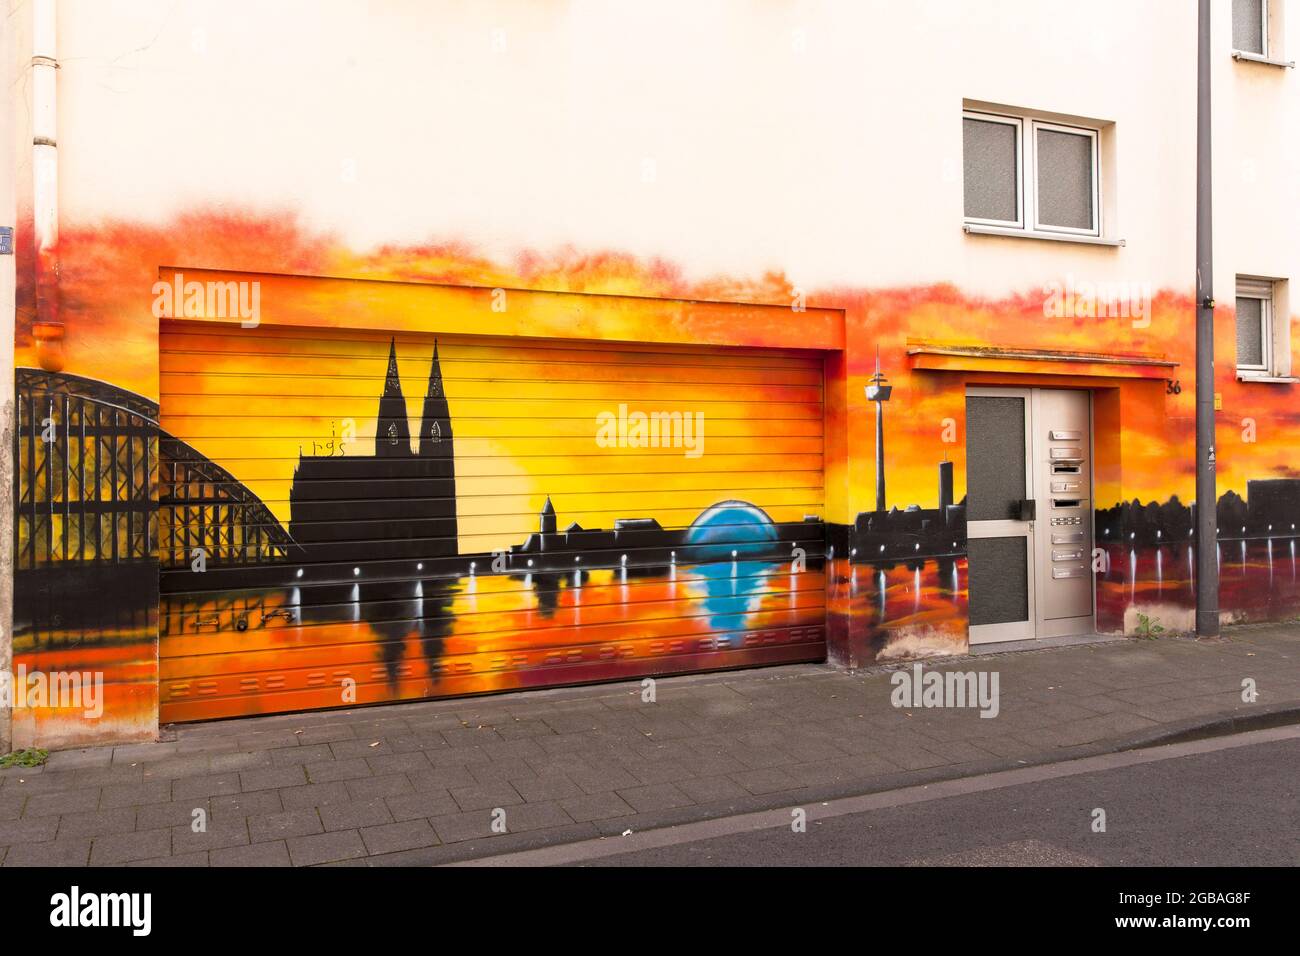 Wandbild auf einem Gebäude in der Landsbergstraße, Kölner Panorama, Köln, Deutschland. Graffiti an einem Haus in der Landsbergstraße, Panorama von Köln, Köln Stockfoto